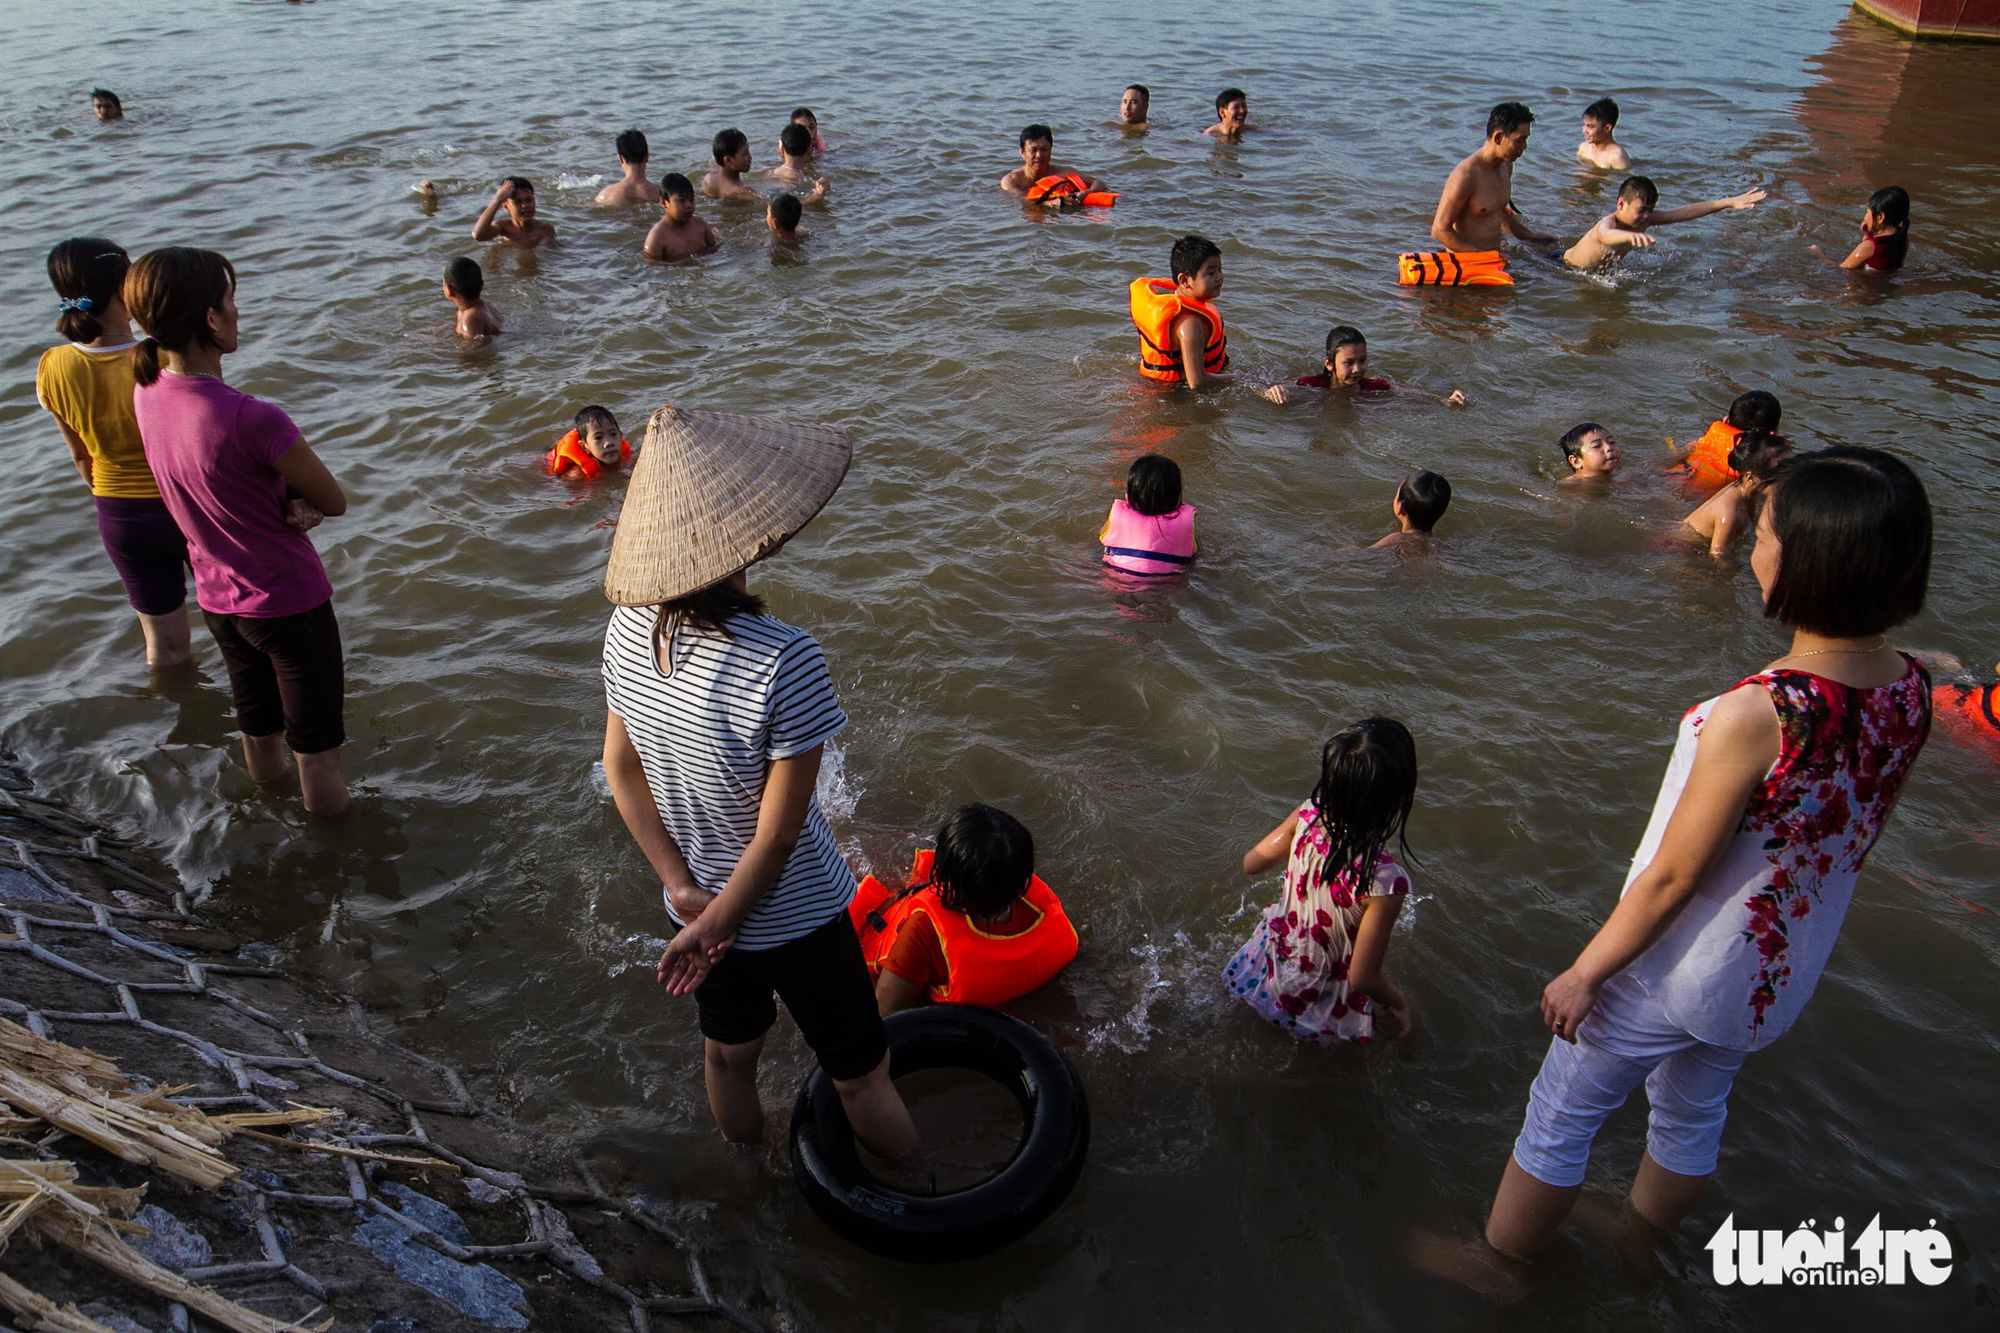 Over five children drown in Vietnam each day: ministry statistics